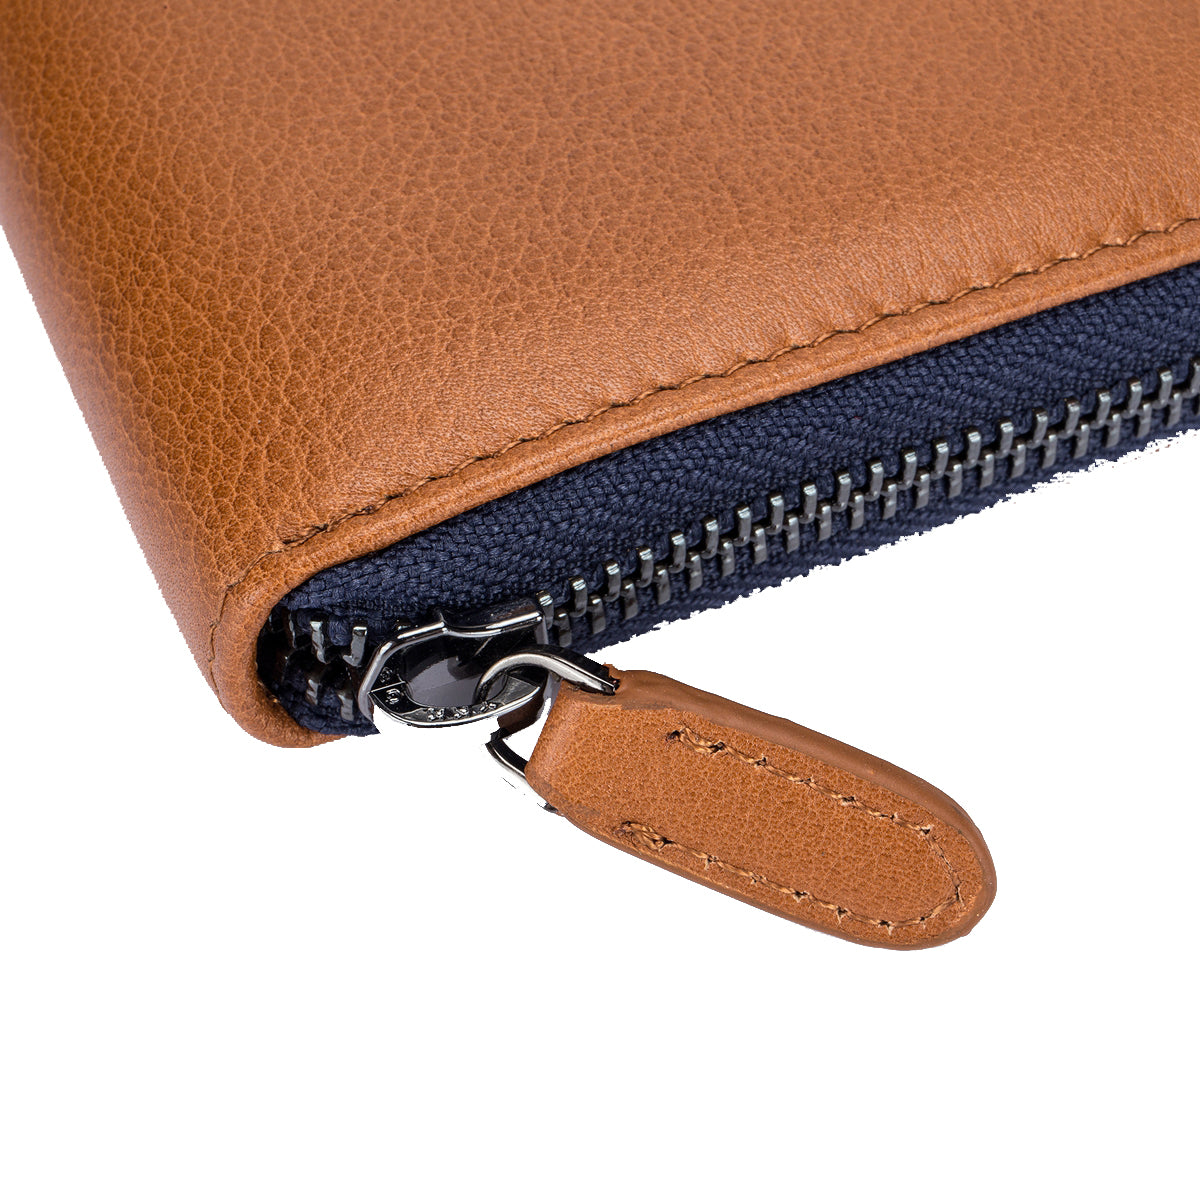 Tan Leather Zip Around Wallet